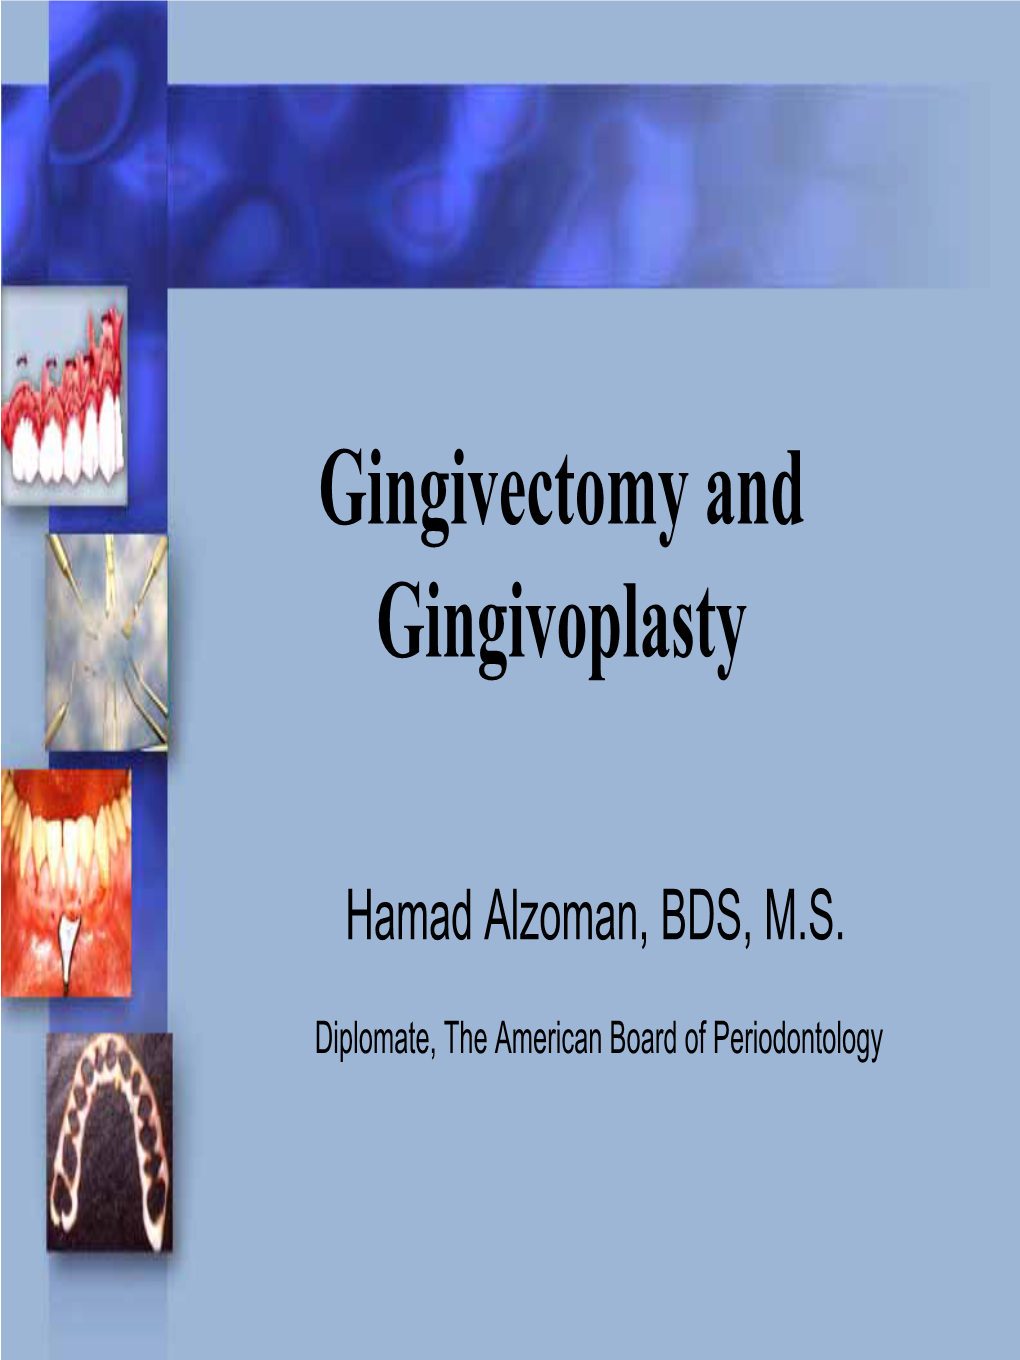 Gingivectomy and Gingivoplasty